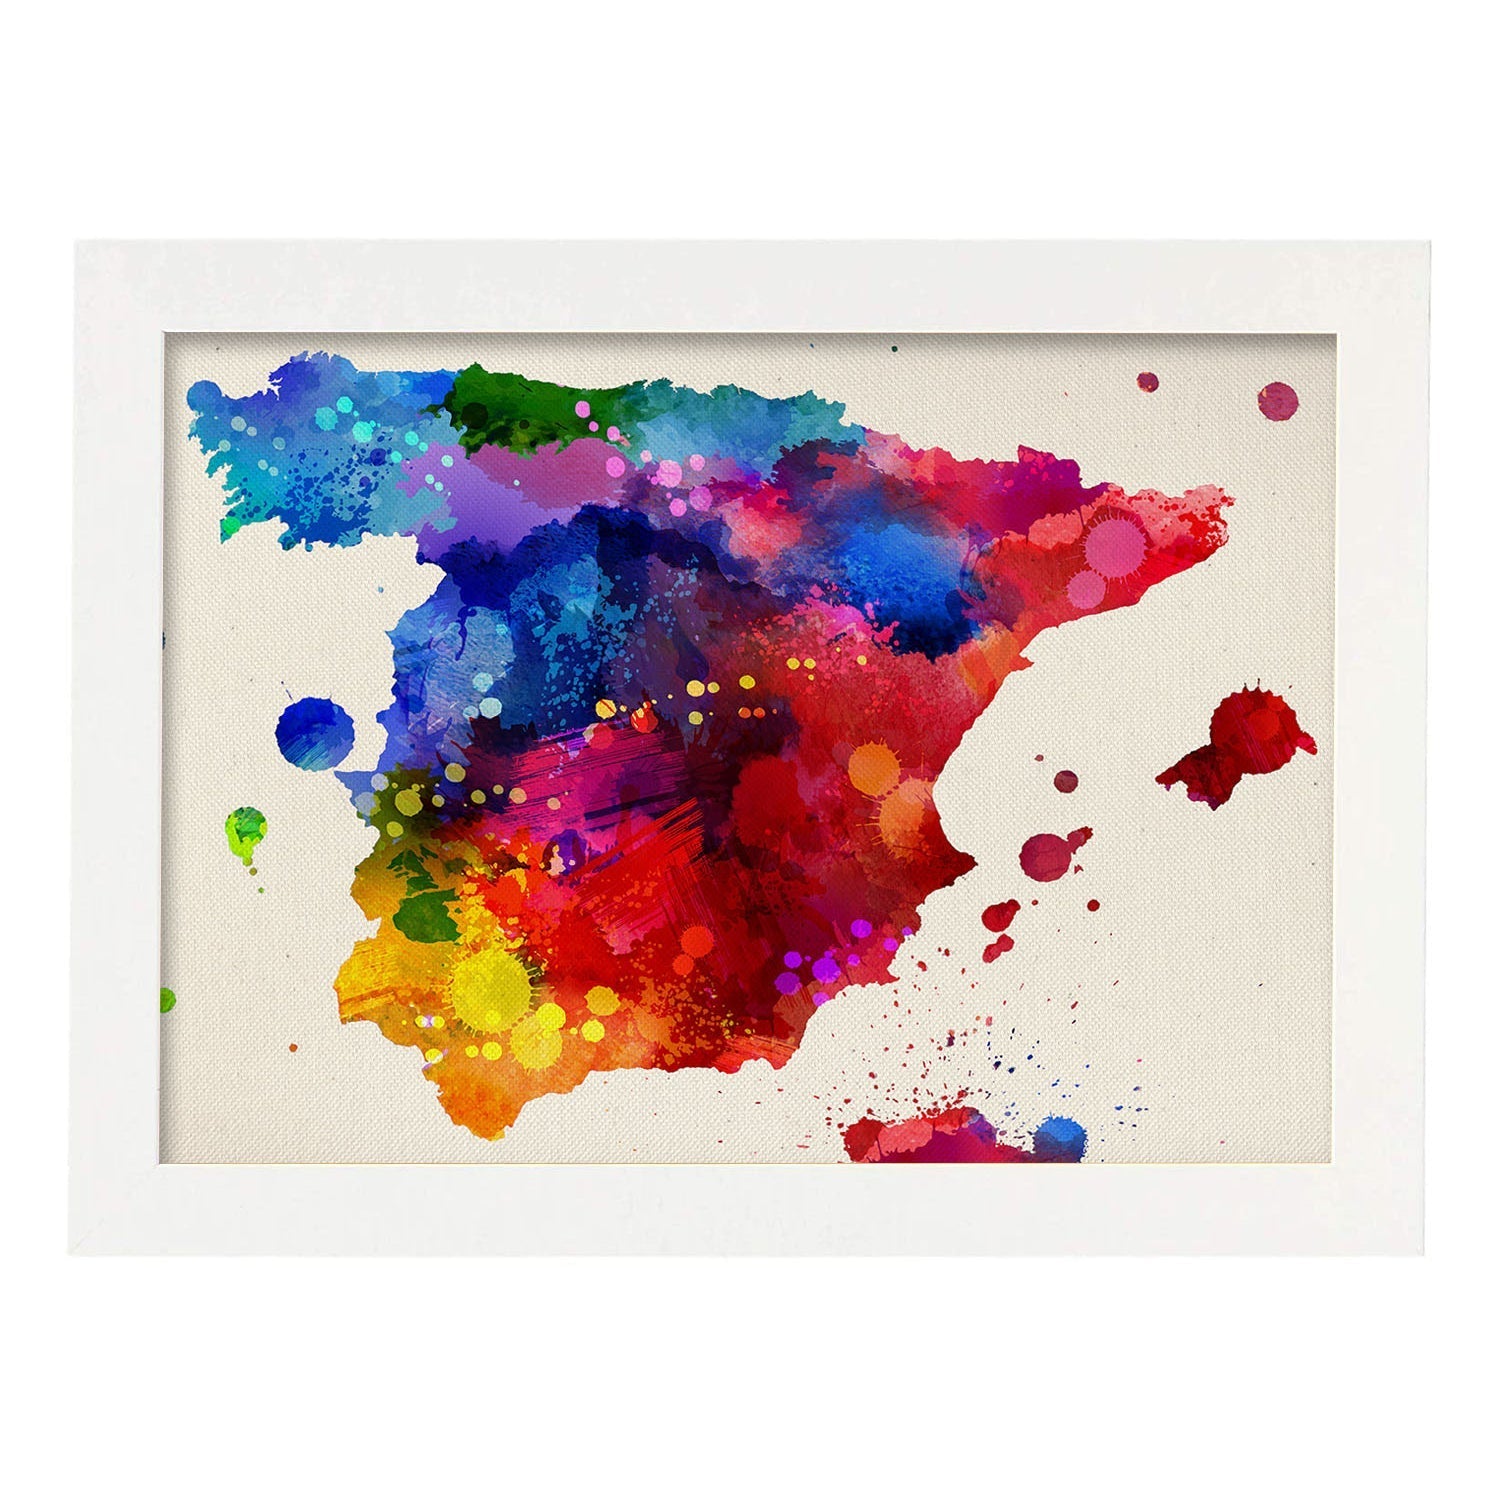 Poster de Mapa Espana 2. Láminas e ilustraciones de ciudades, comunidades, y mapas de España.-Artwork-Nacnic-A3-Marco Blanco-Nacnic Estudio SL